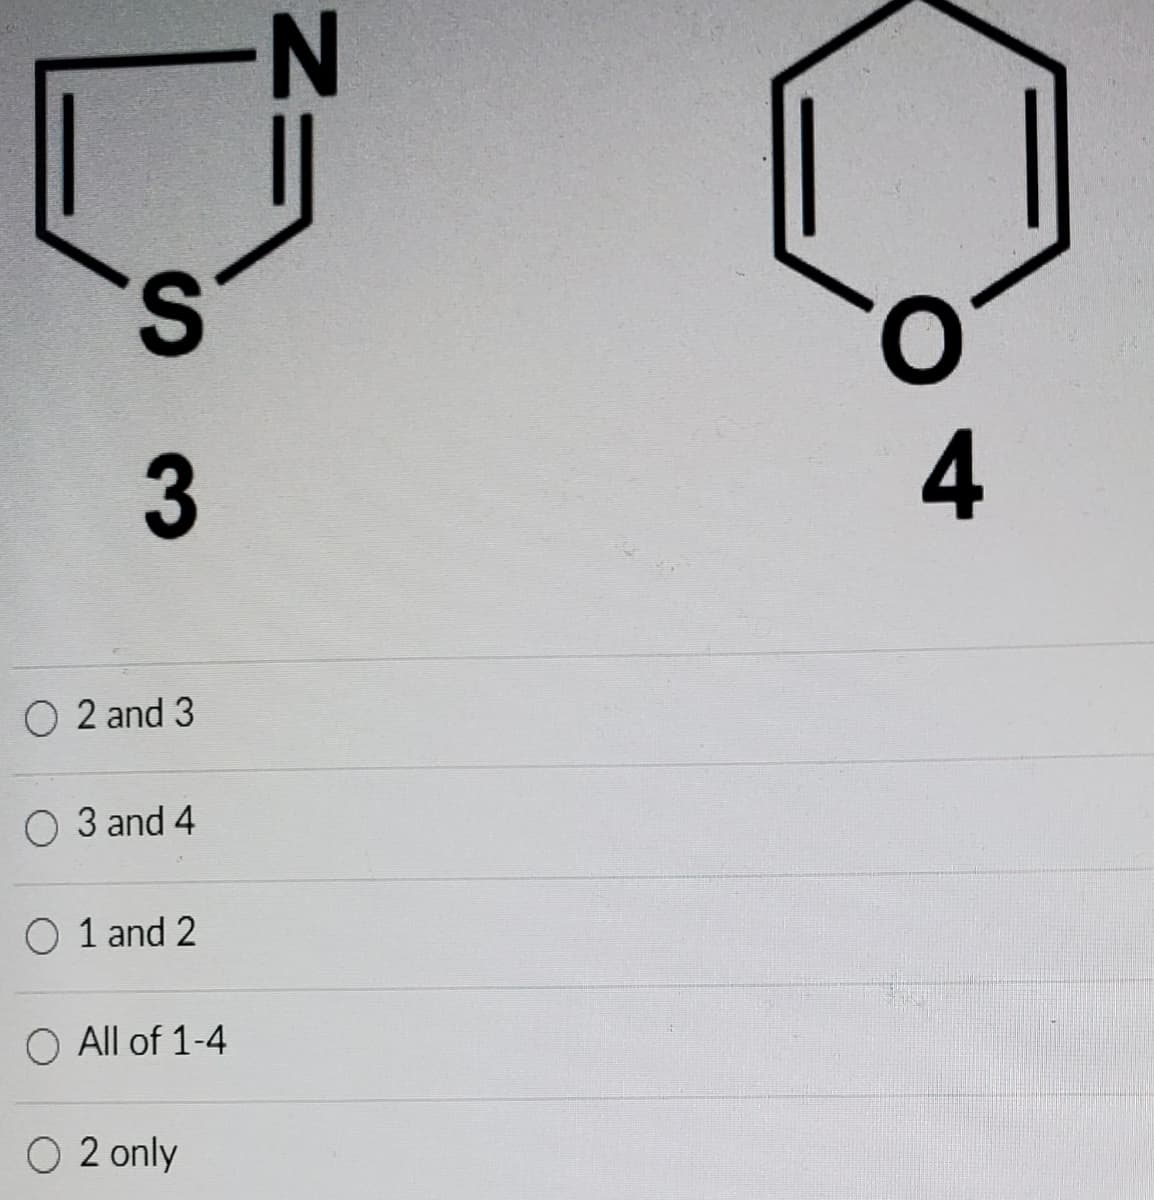 S.
O 2 and 3
3 and 4
O 1 and 2
O All of 1-4
O 2 only
3
